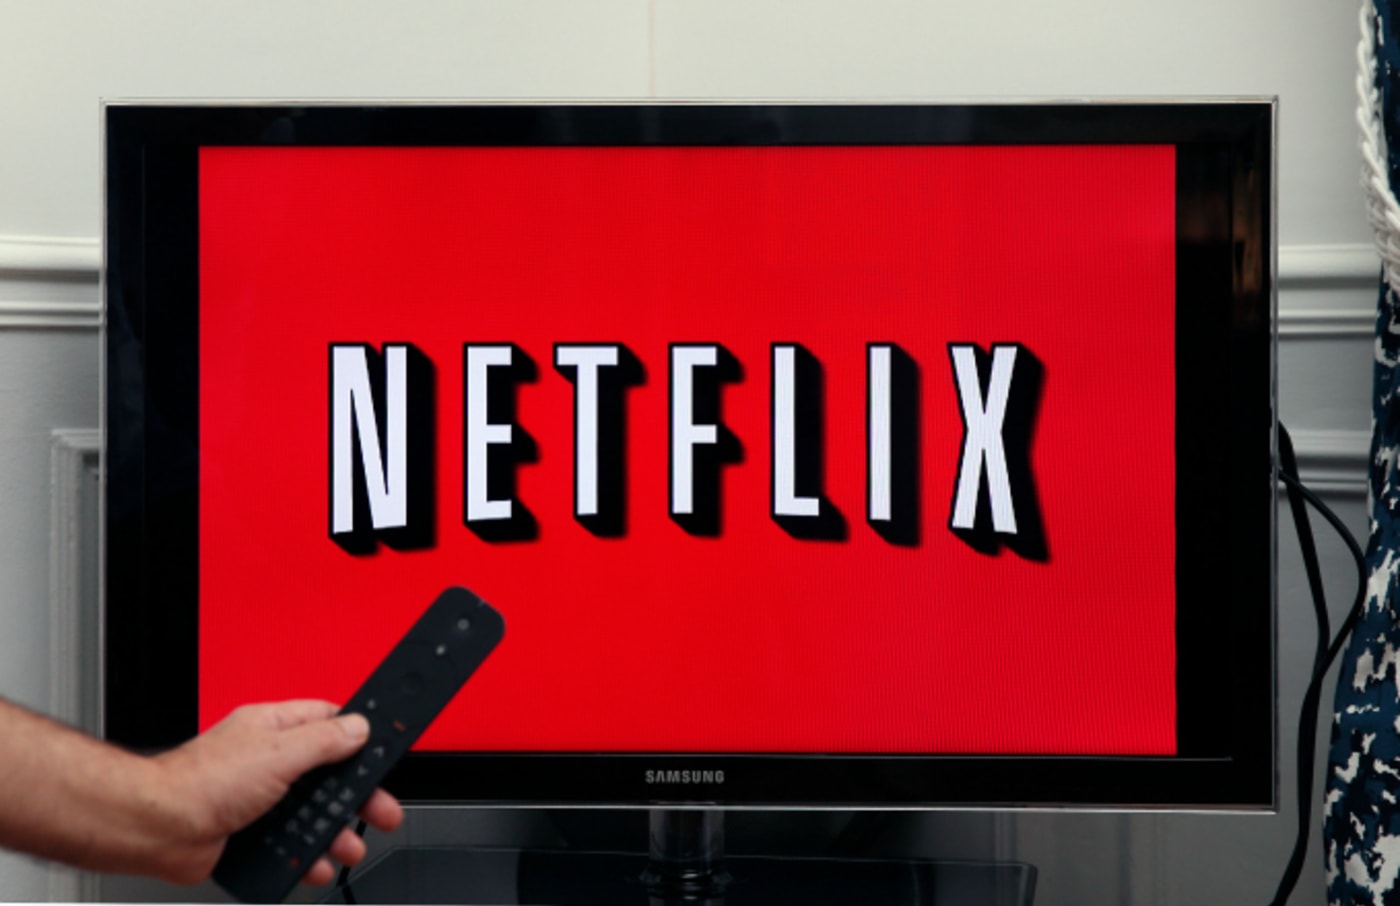 In this photo illustration, the Netflix media service provider's logo